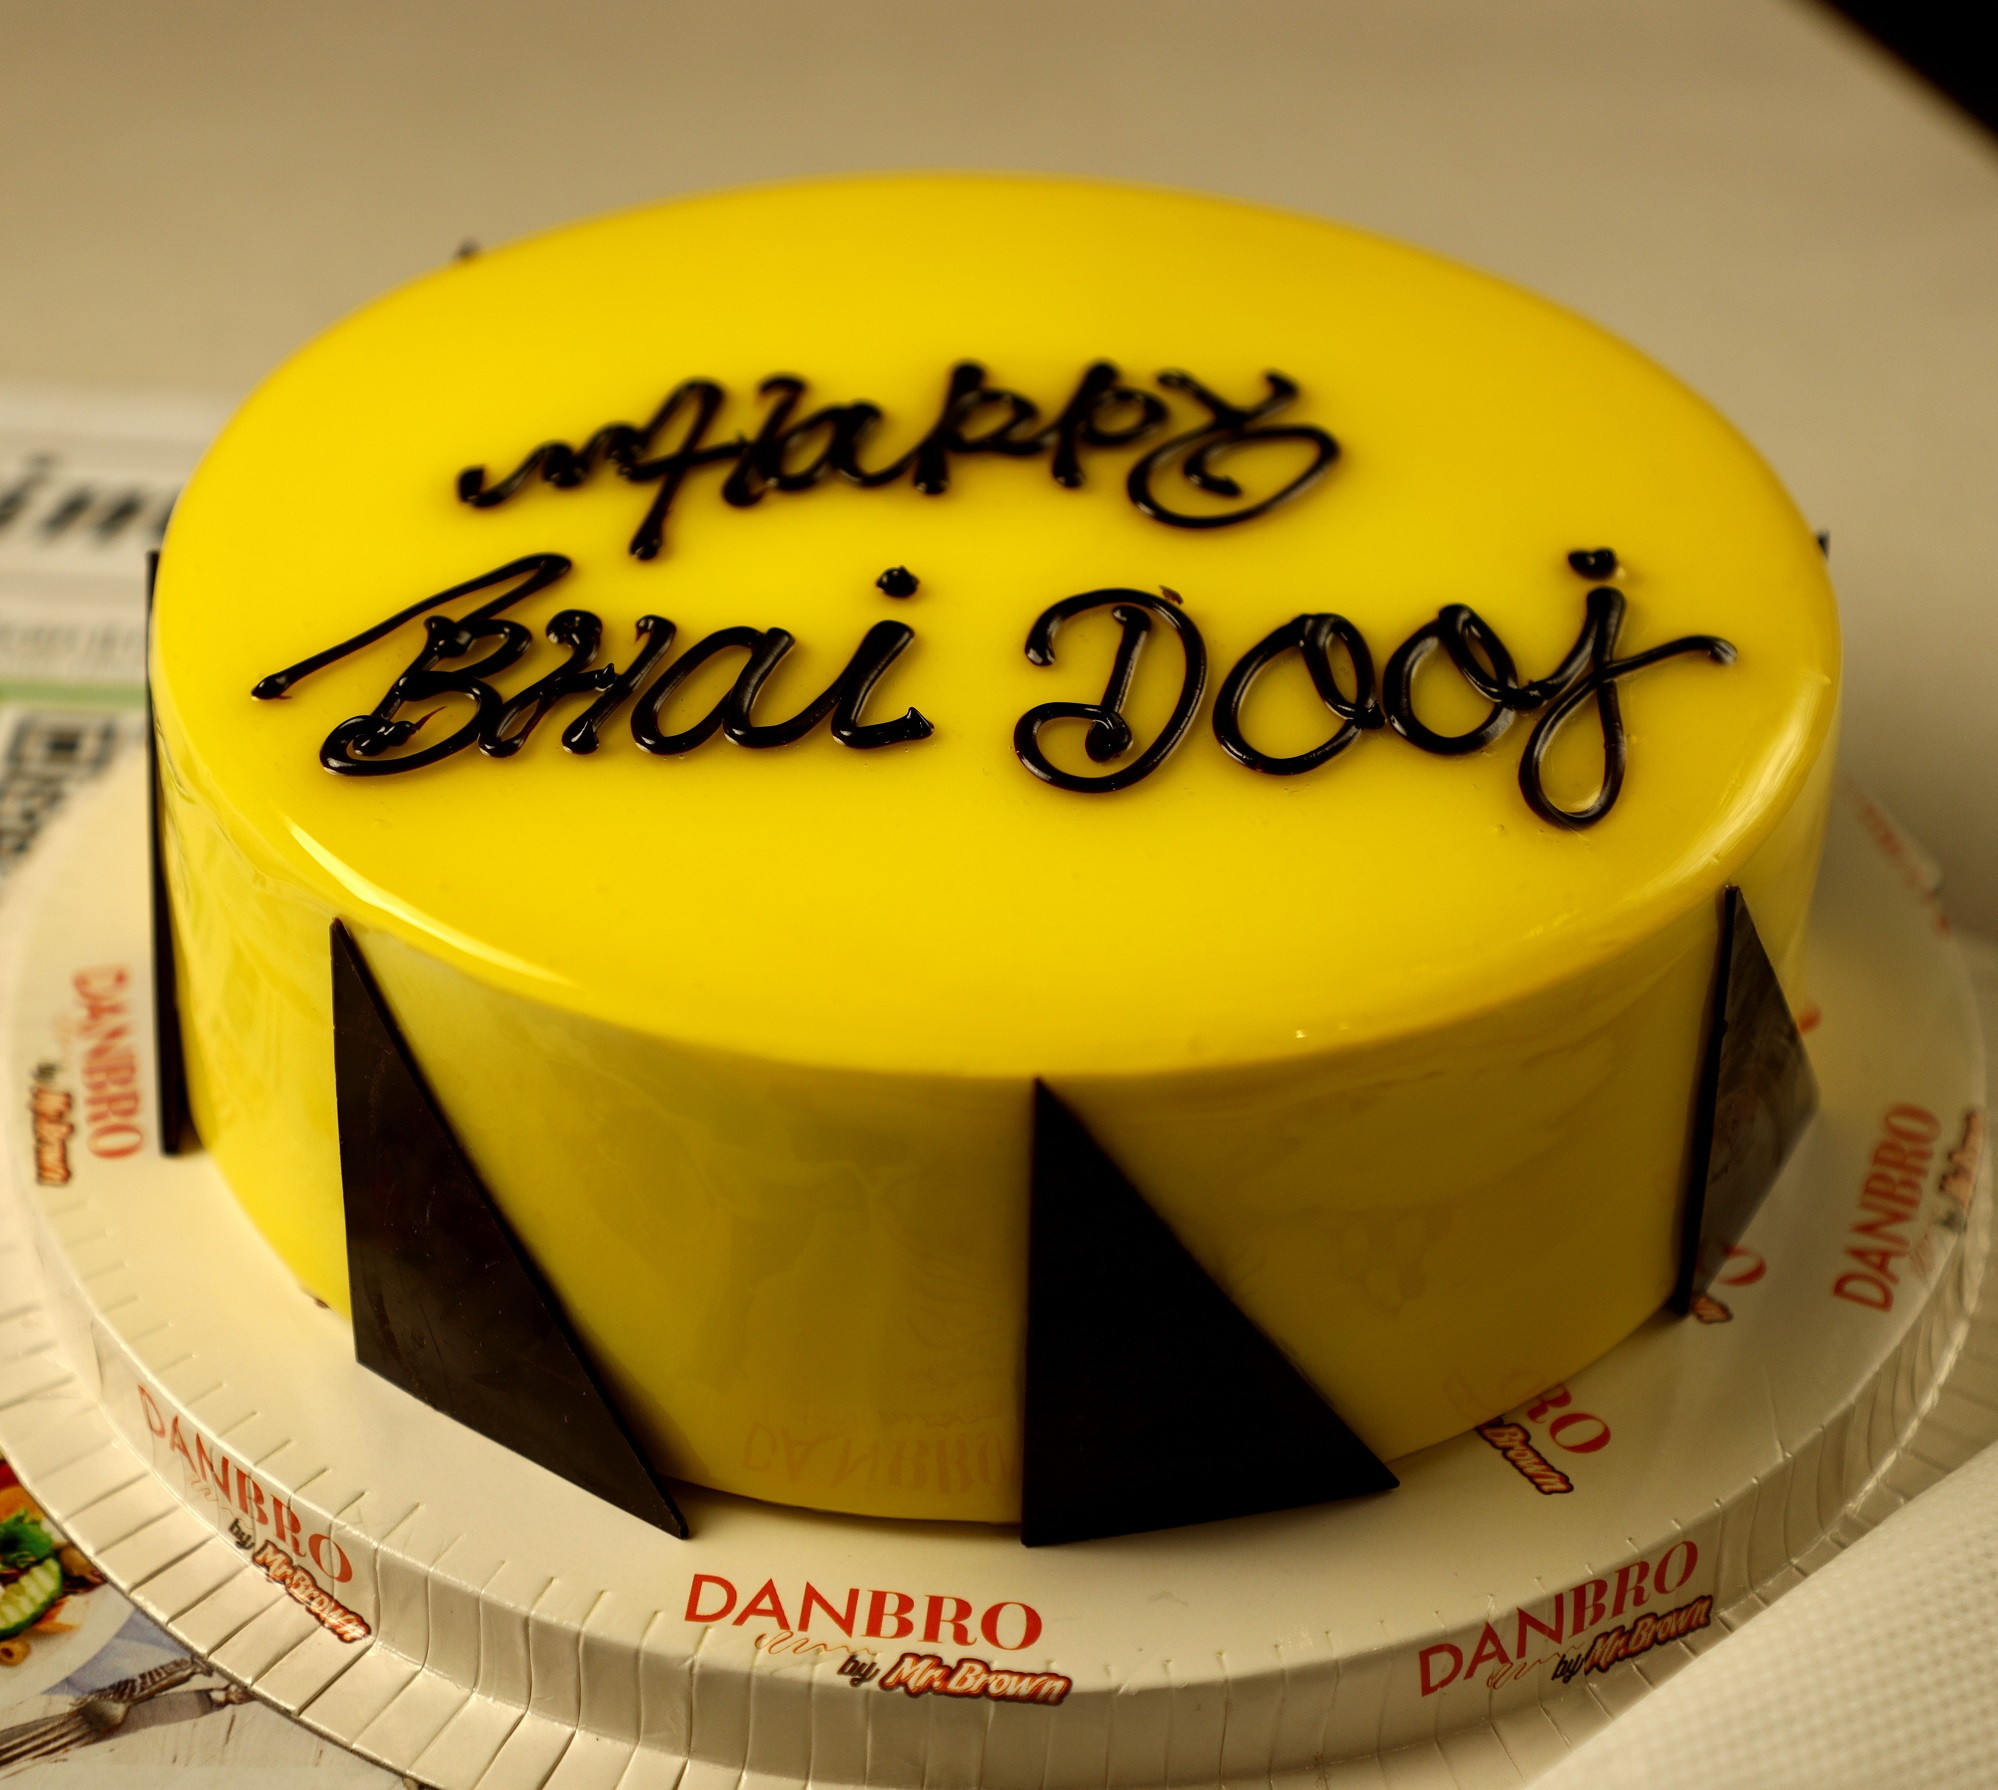 Happy Bhai Dooj Special Cake Half Kg : Gift/Send Bhaidooj Gifts Online  HD1121108 |IGP.com